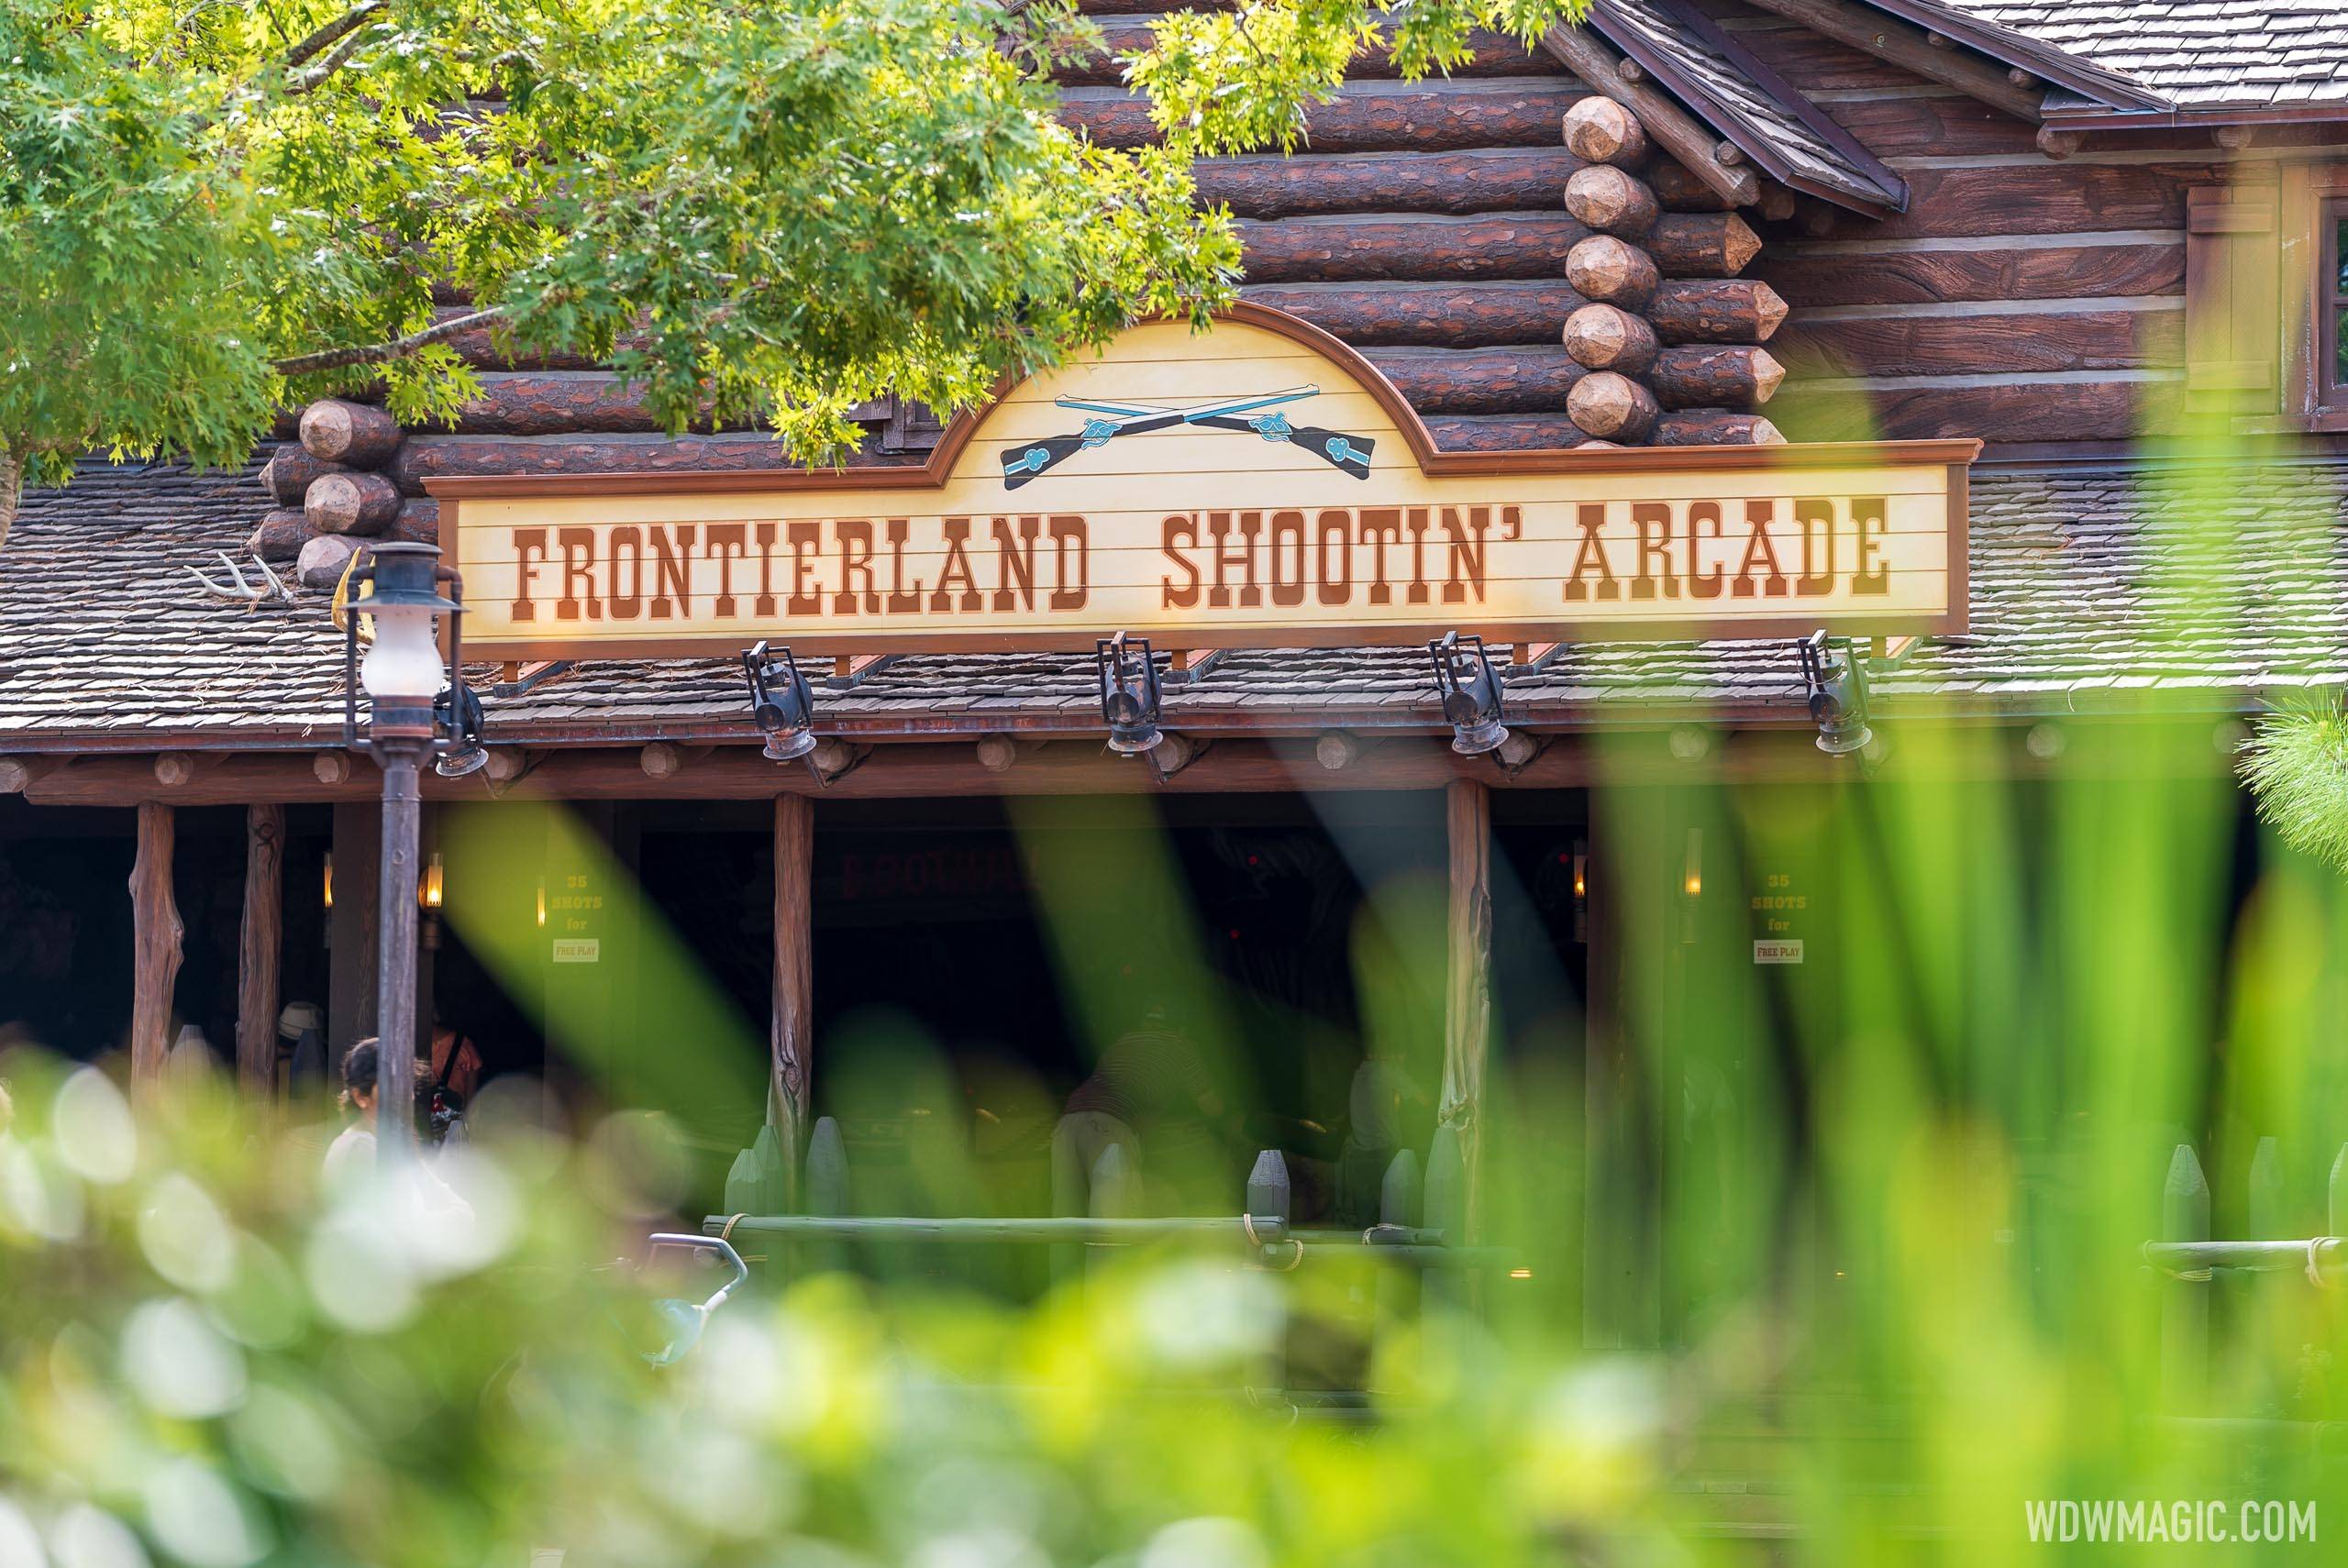 Frontierland Shootin' Arcade free play